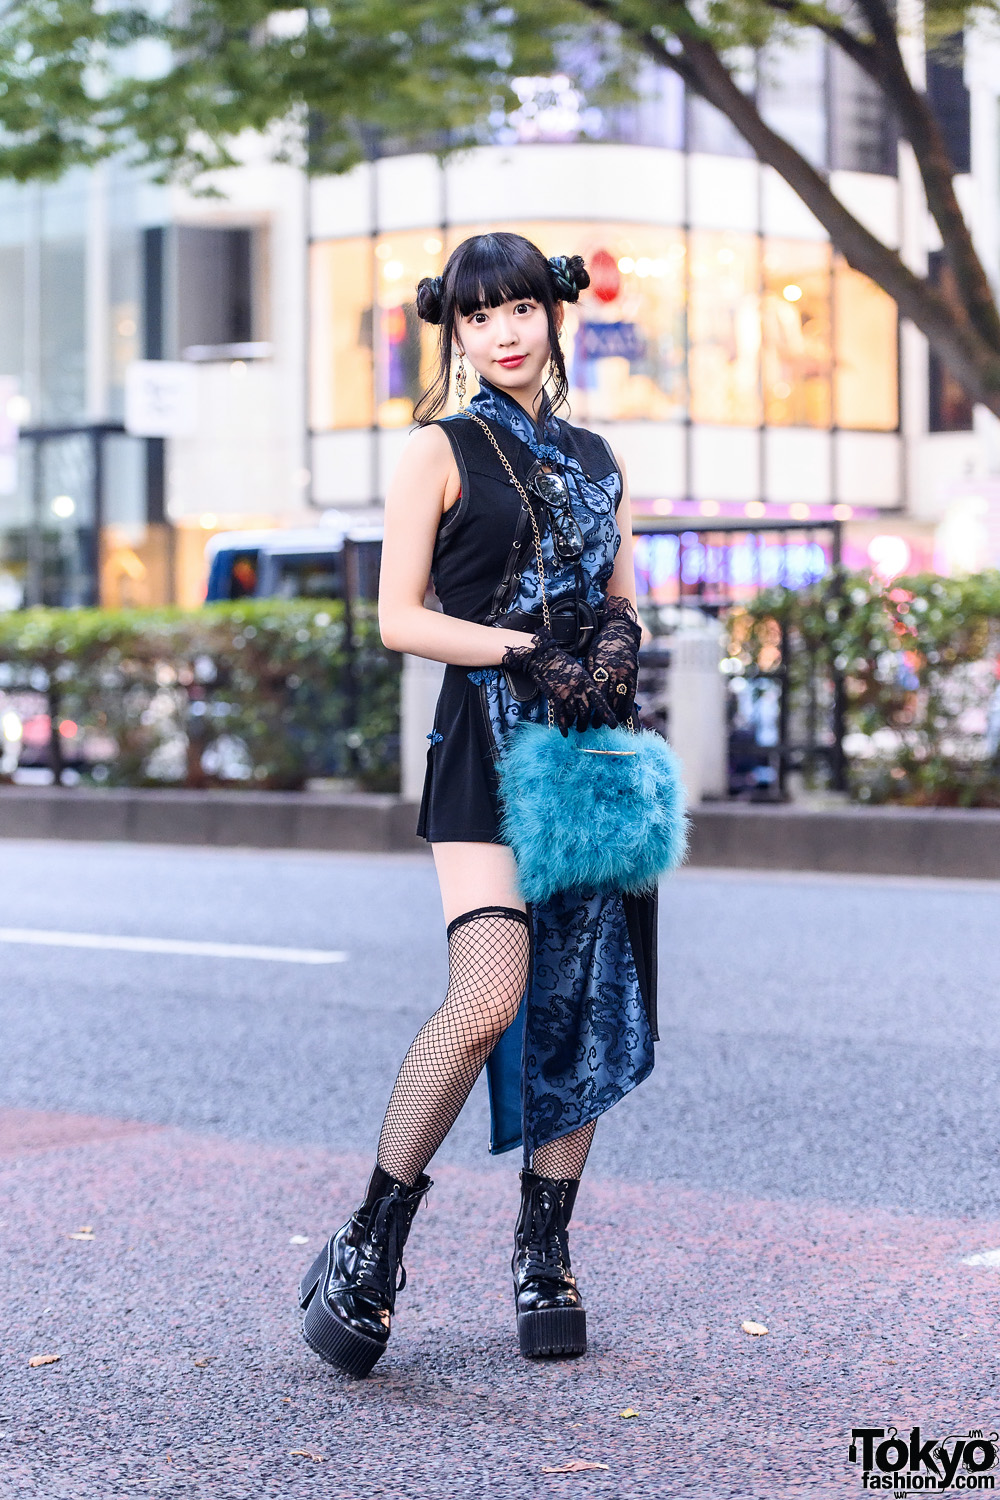 Harajuku Style w/ Twin Buns, Qutie Frash Dress, Kobinai Bag, Platform Boots & Lace Gloves